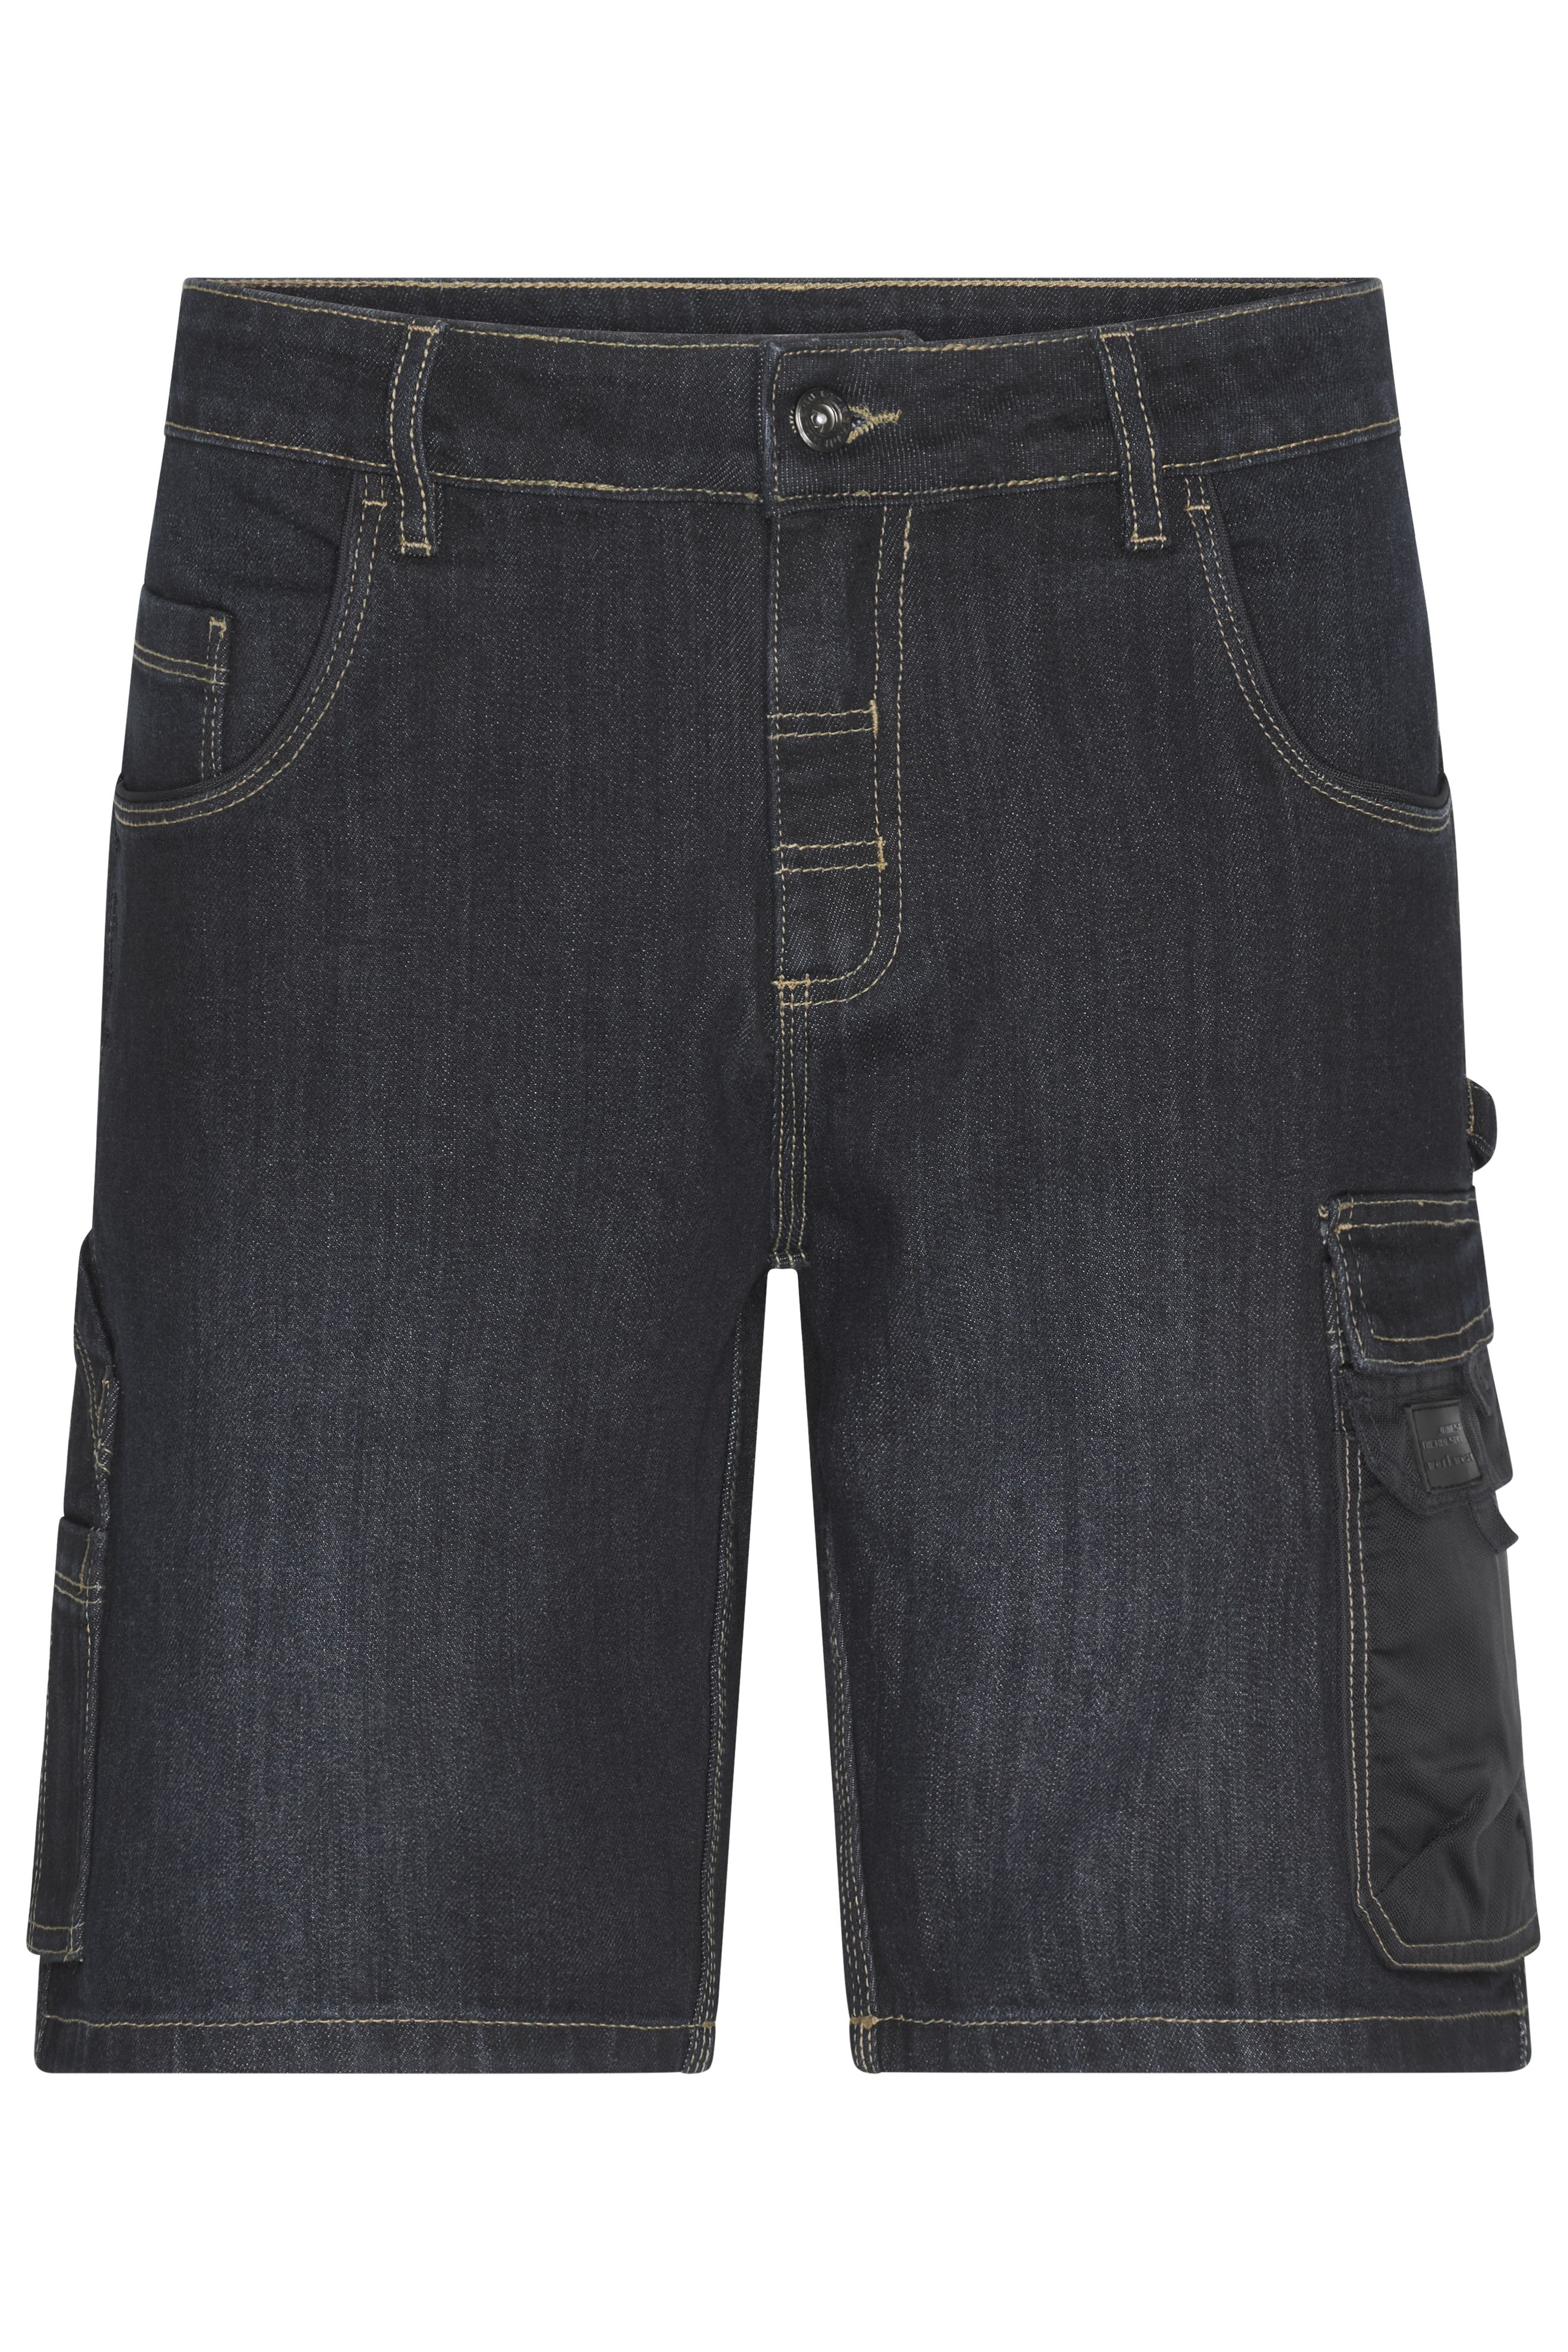 Workwear Stretch-Bermuda-Jeans JN871 Kurze Jeans-Hose mit vielen Details